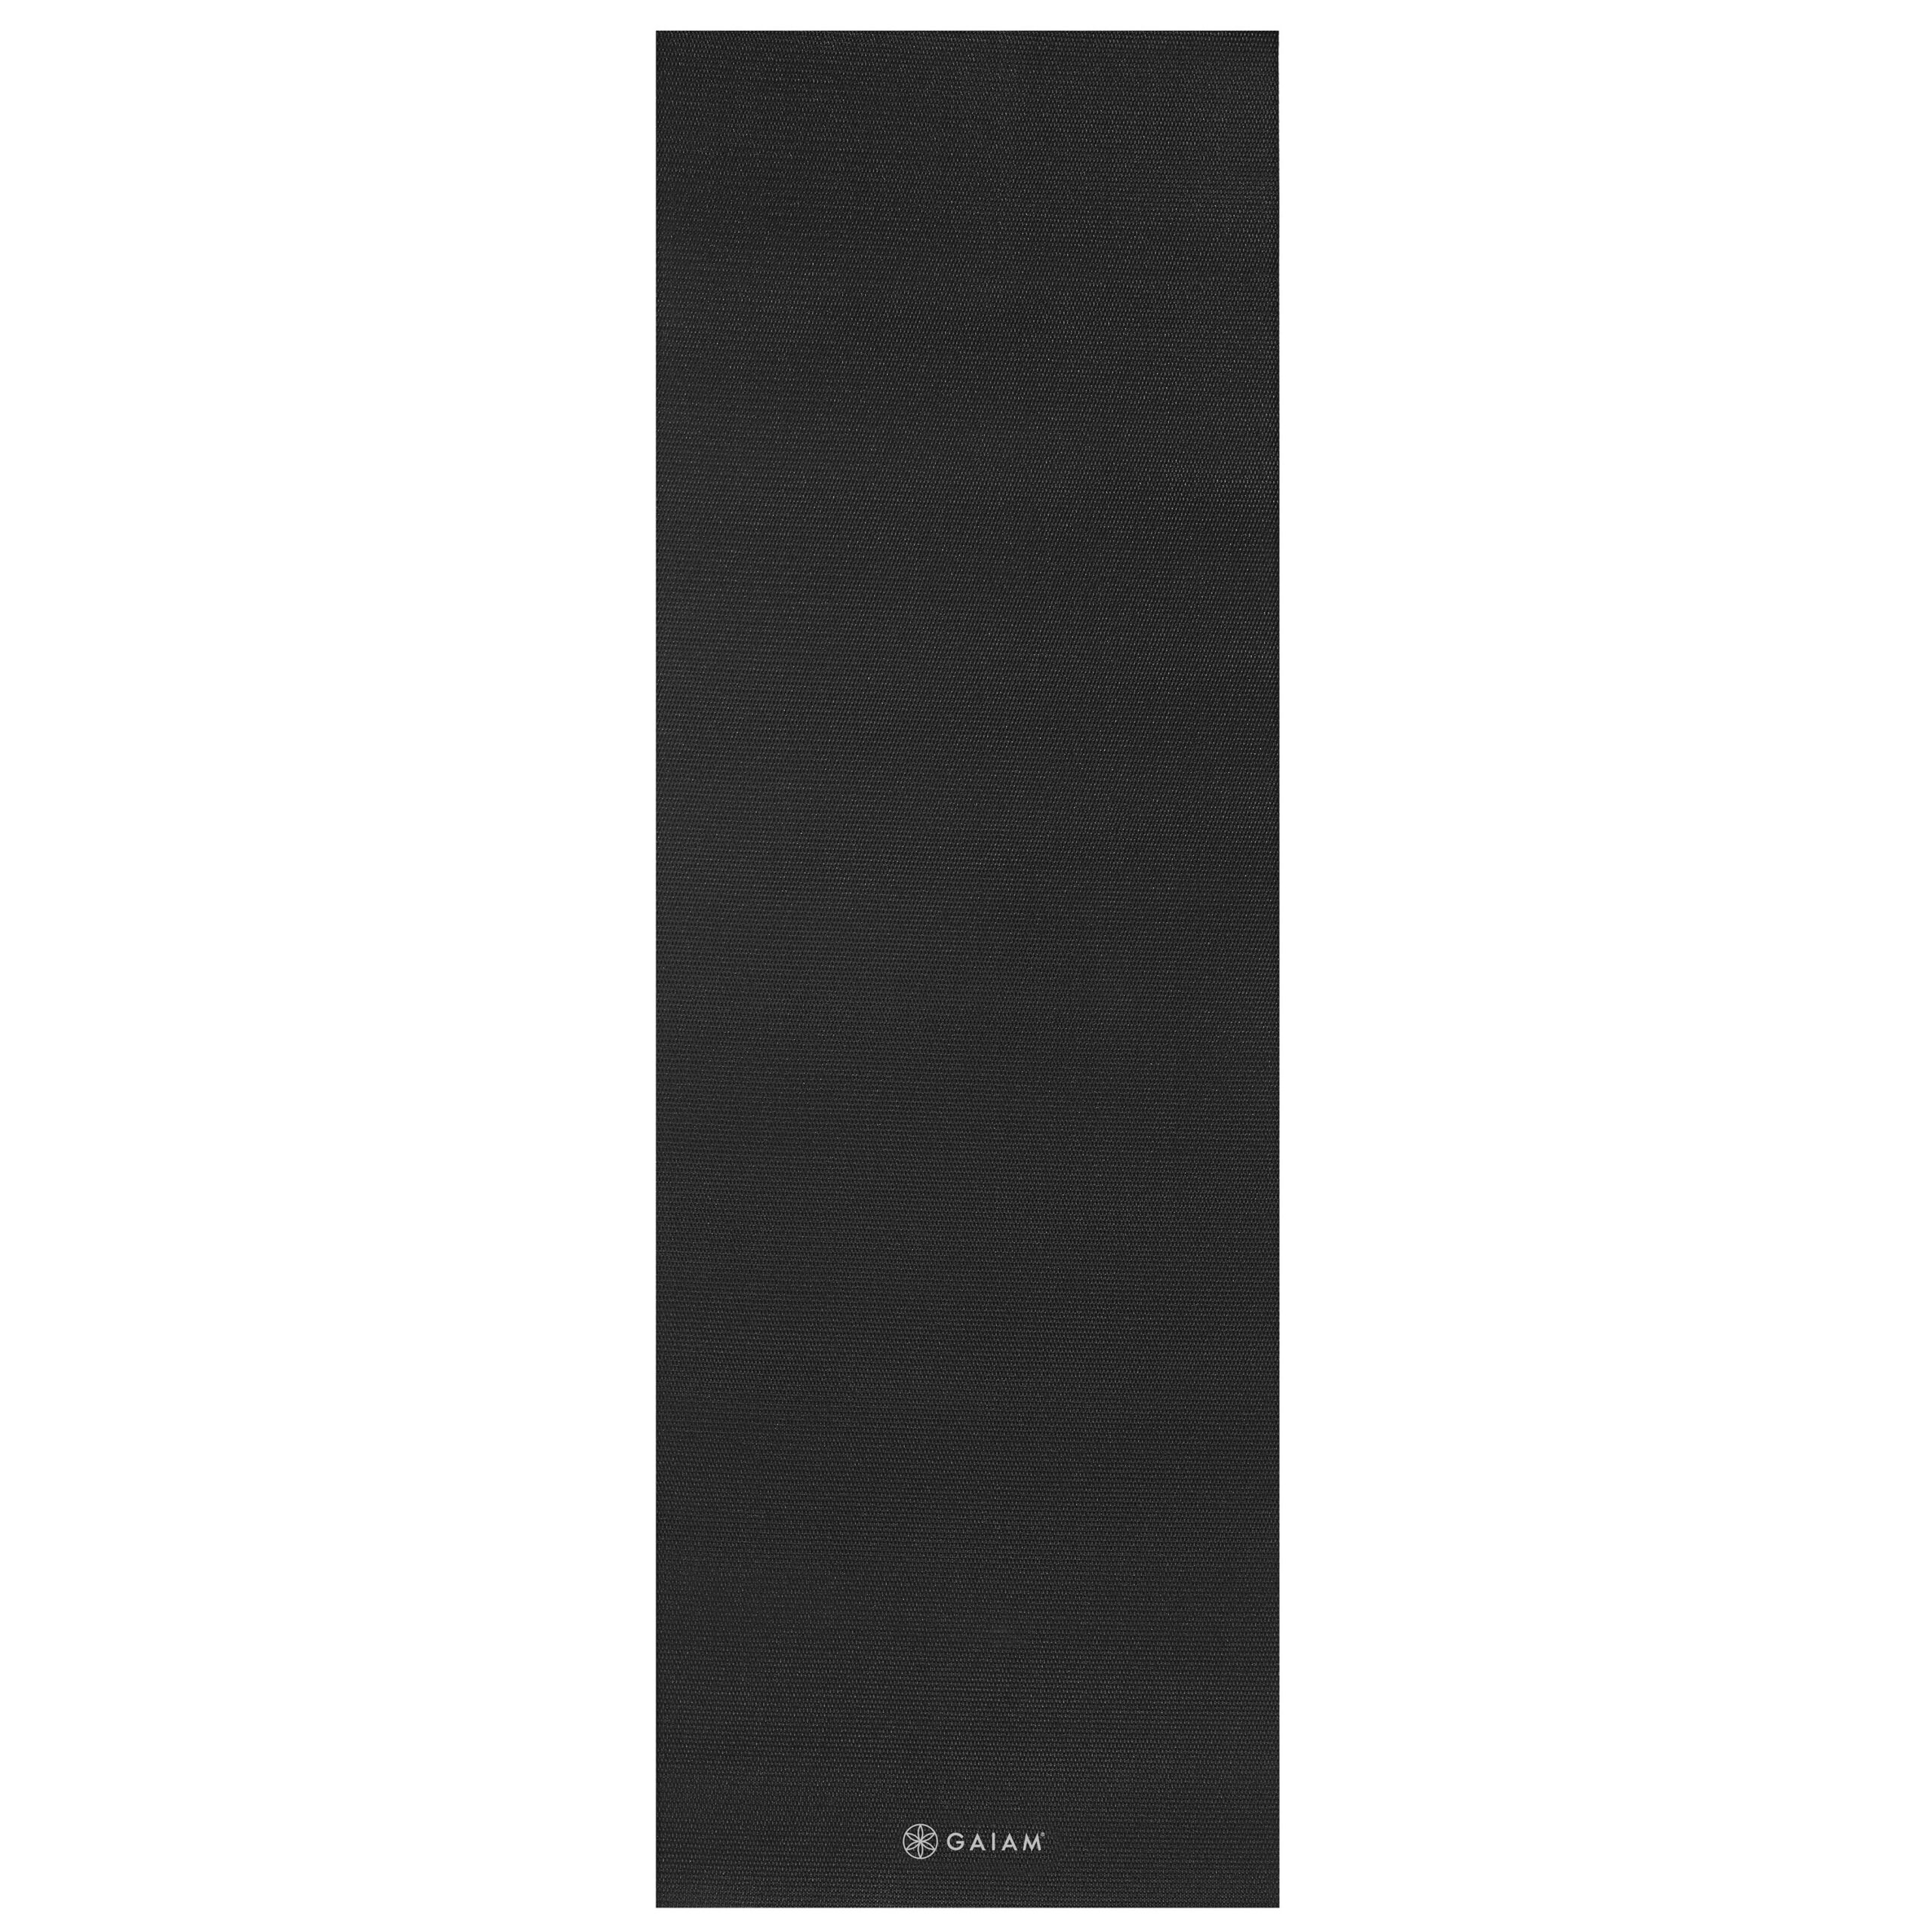 Gaiam Yoga Mat - Zwart - 4 mm